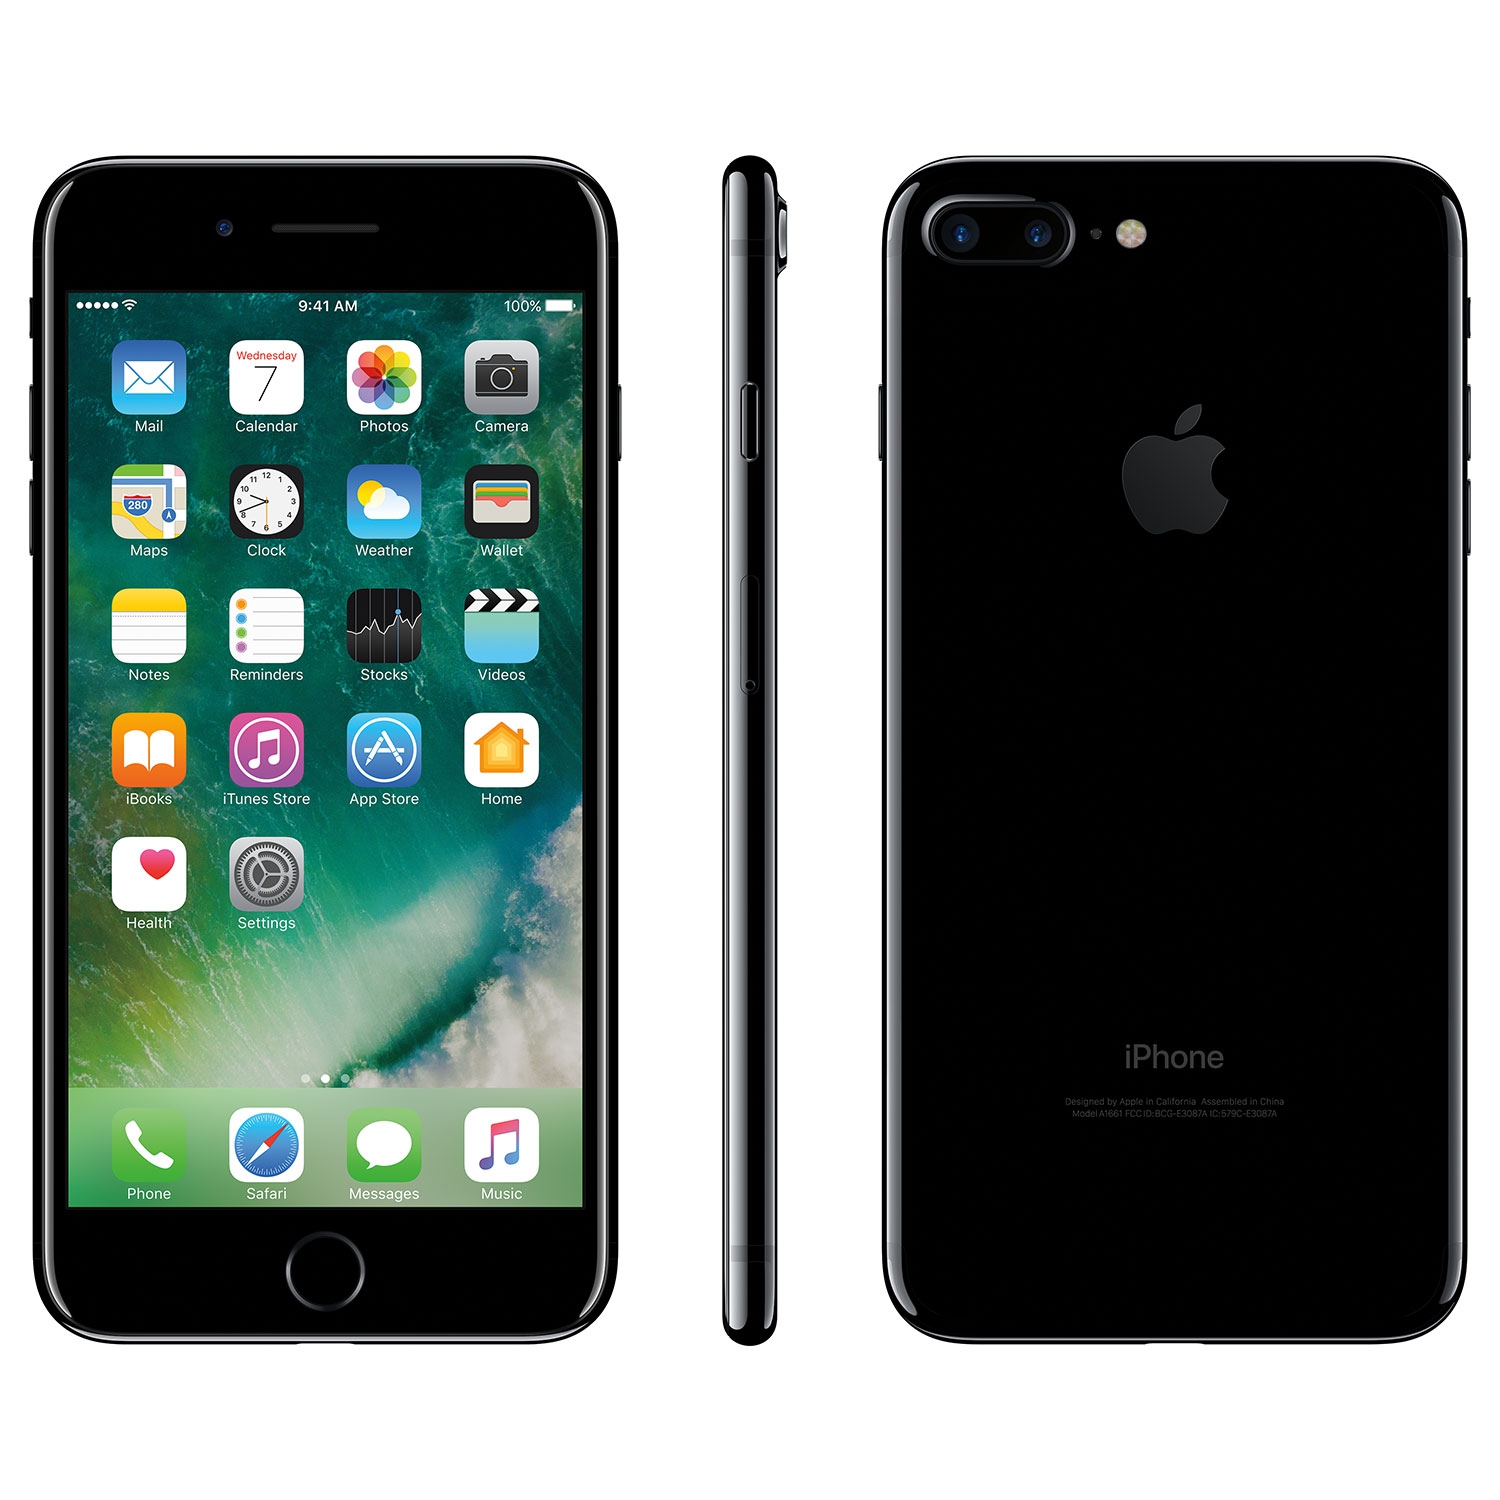 Apple iPhone 7 Plus 128GB Smartphone - Jet Black - Unlocked - Open Box